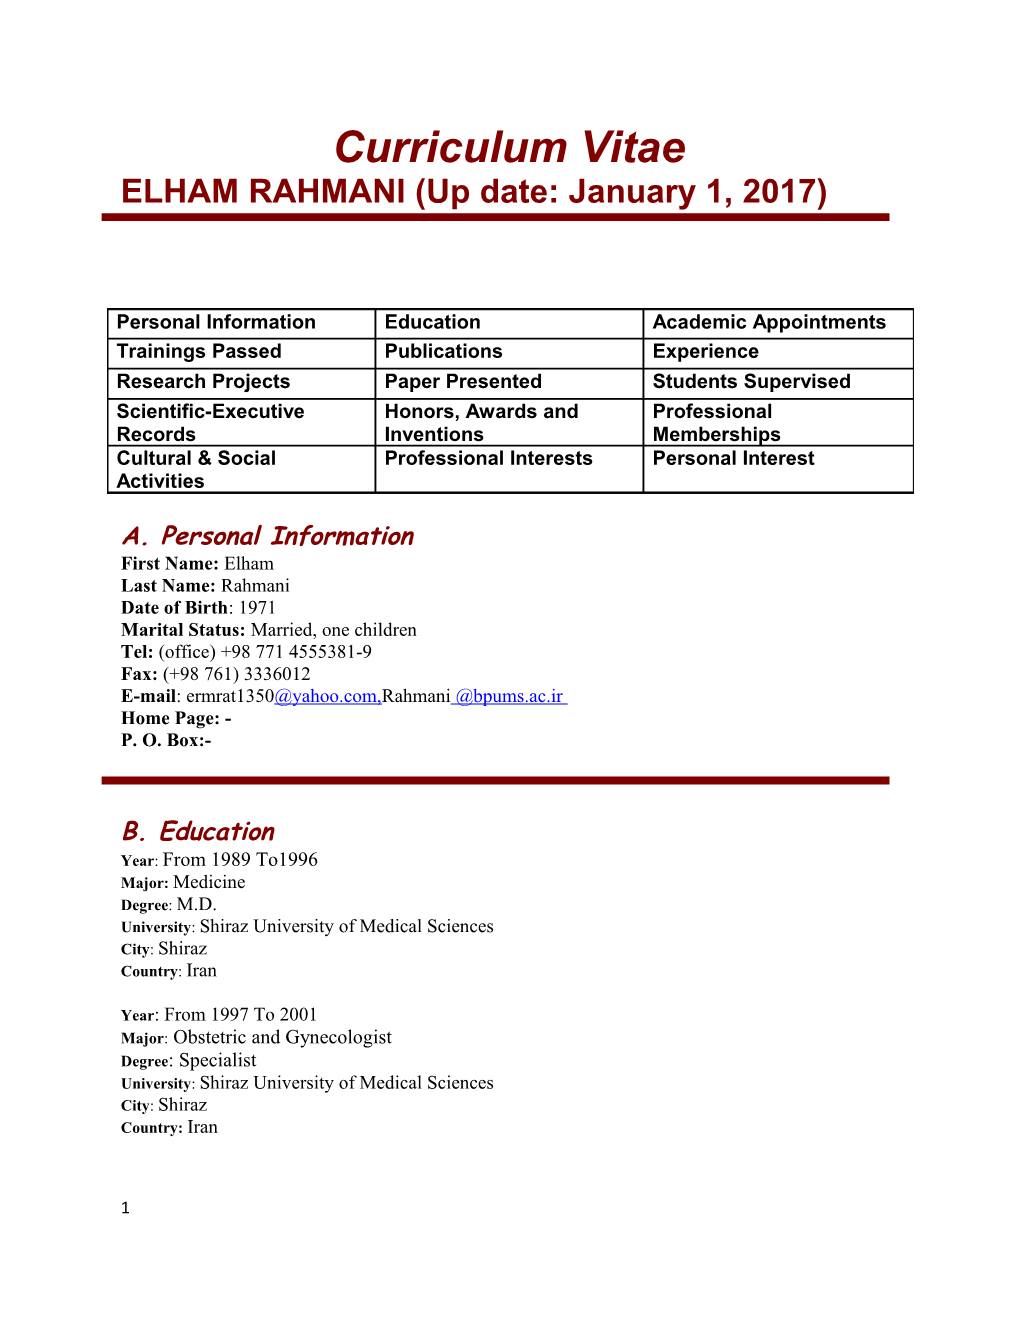 ELHAM RAHMANI (Up Date: January 1, 2017)